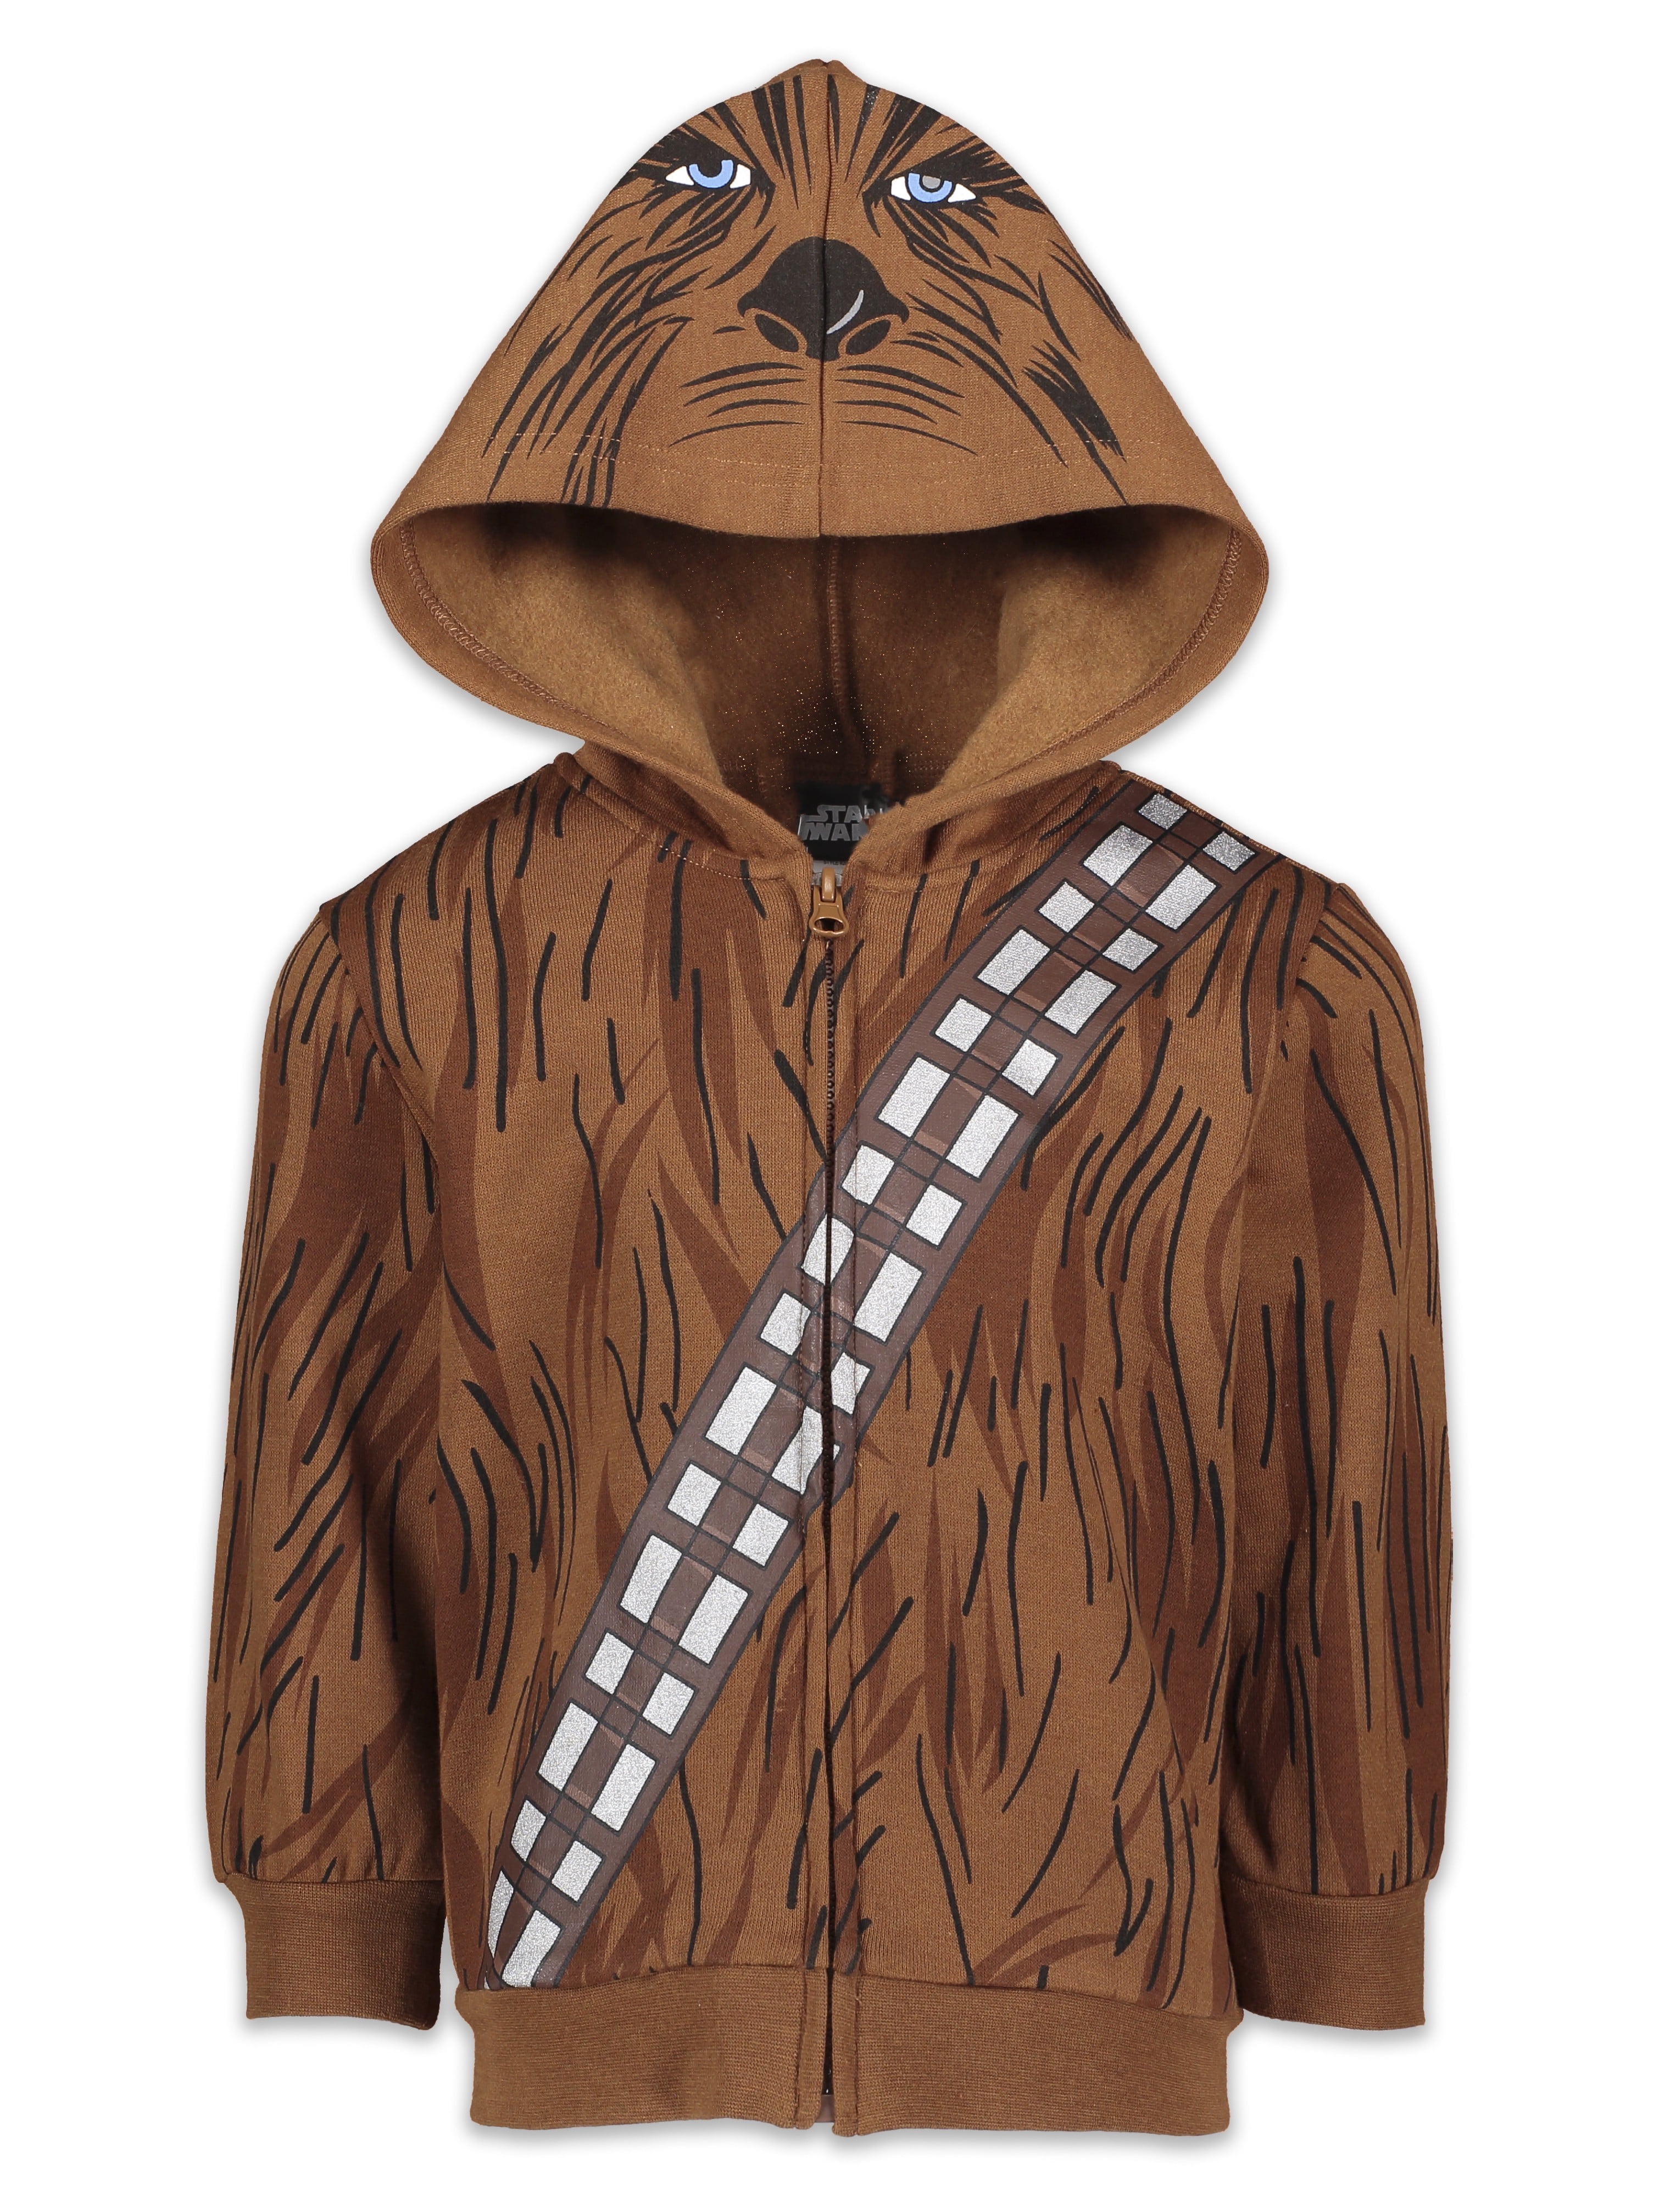 NWT Boys XL Brown CHEWBACCA Star Wars Costume Hoodie Sweatshirt XL 